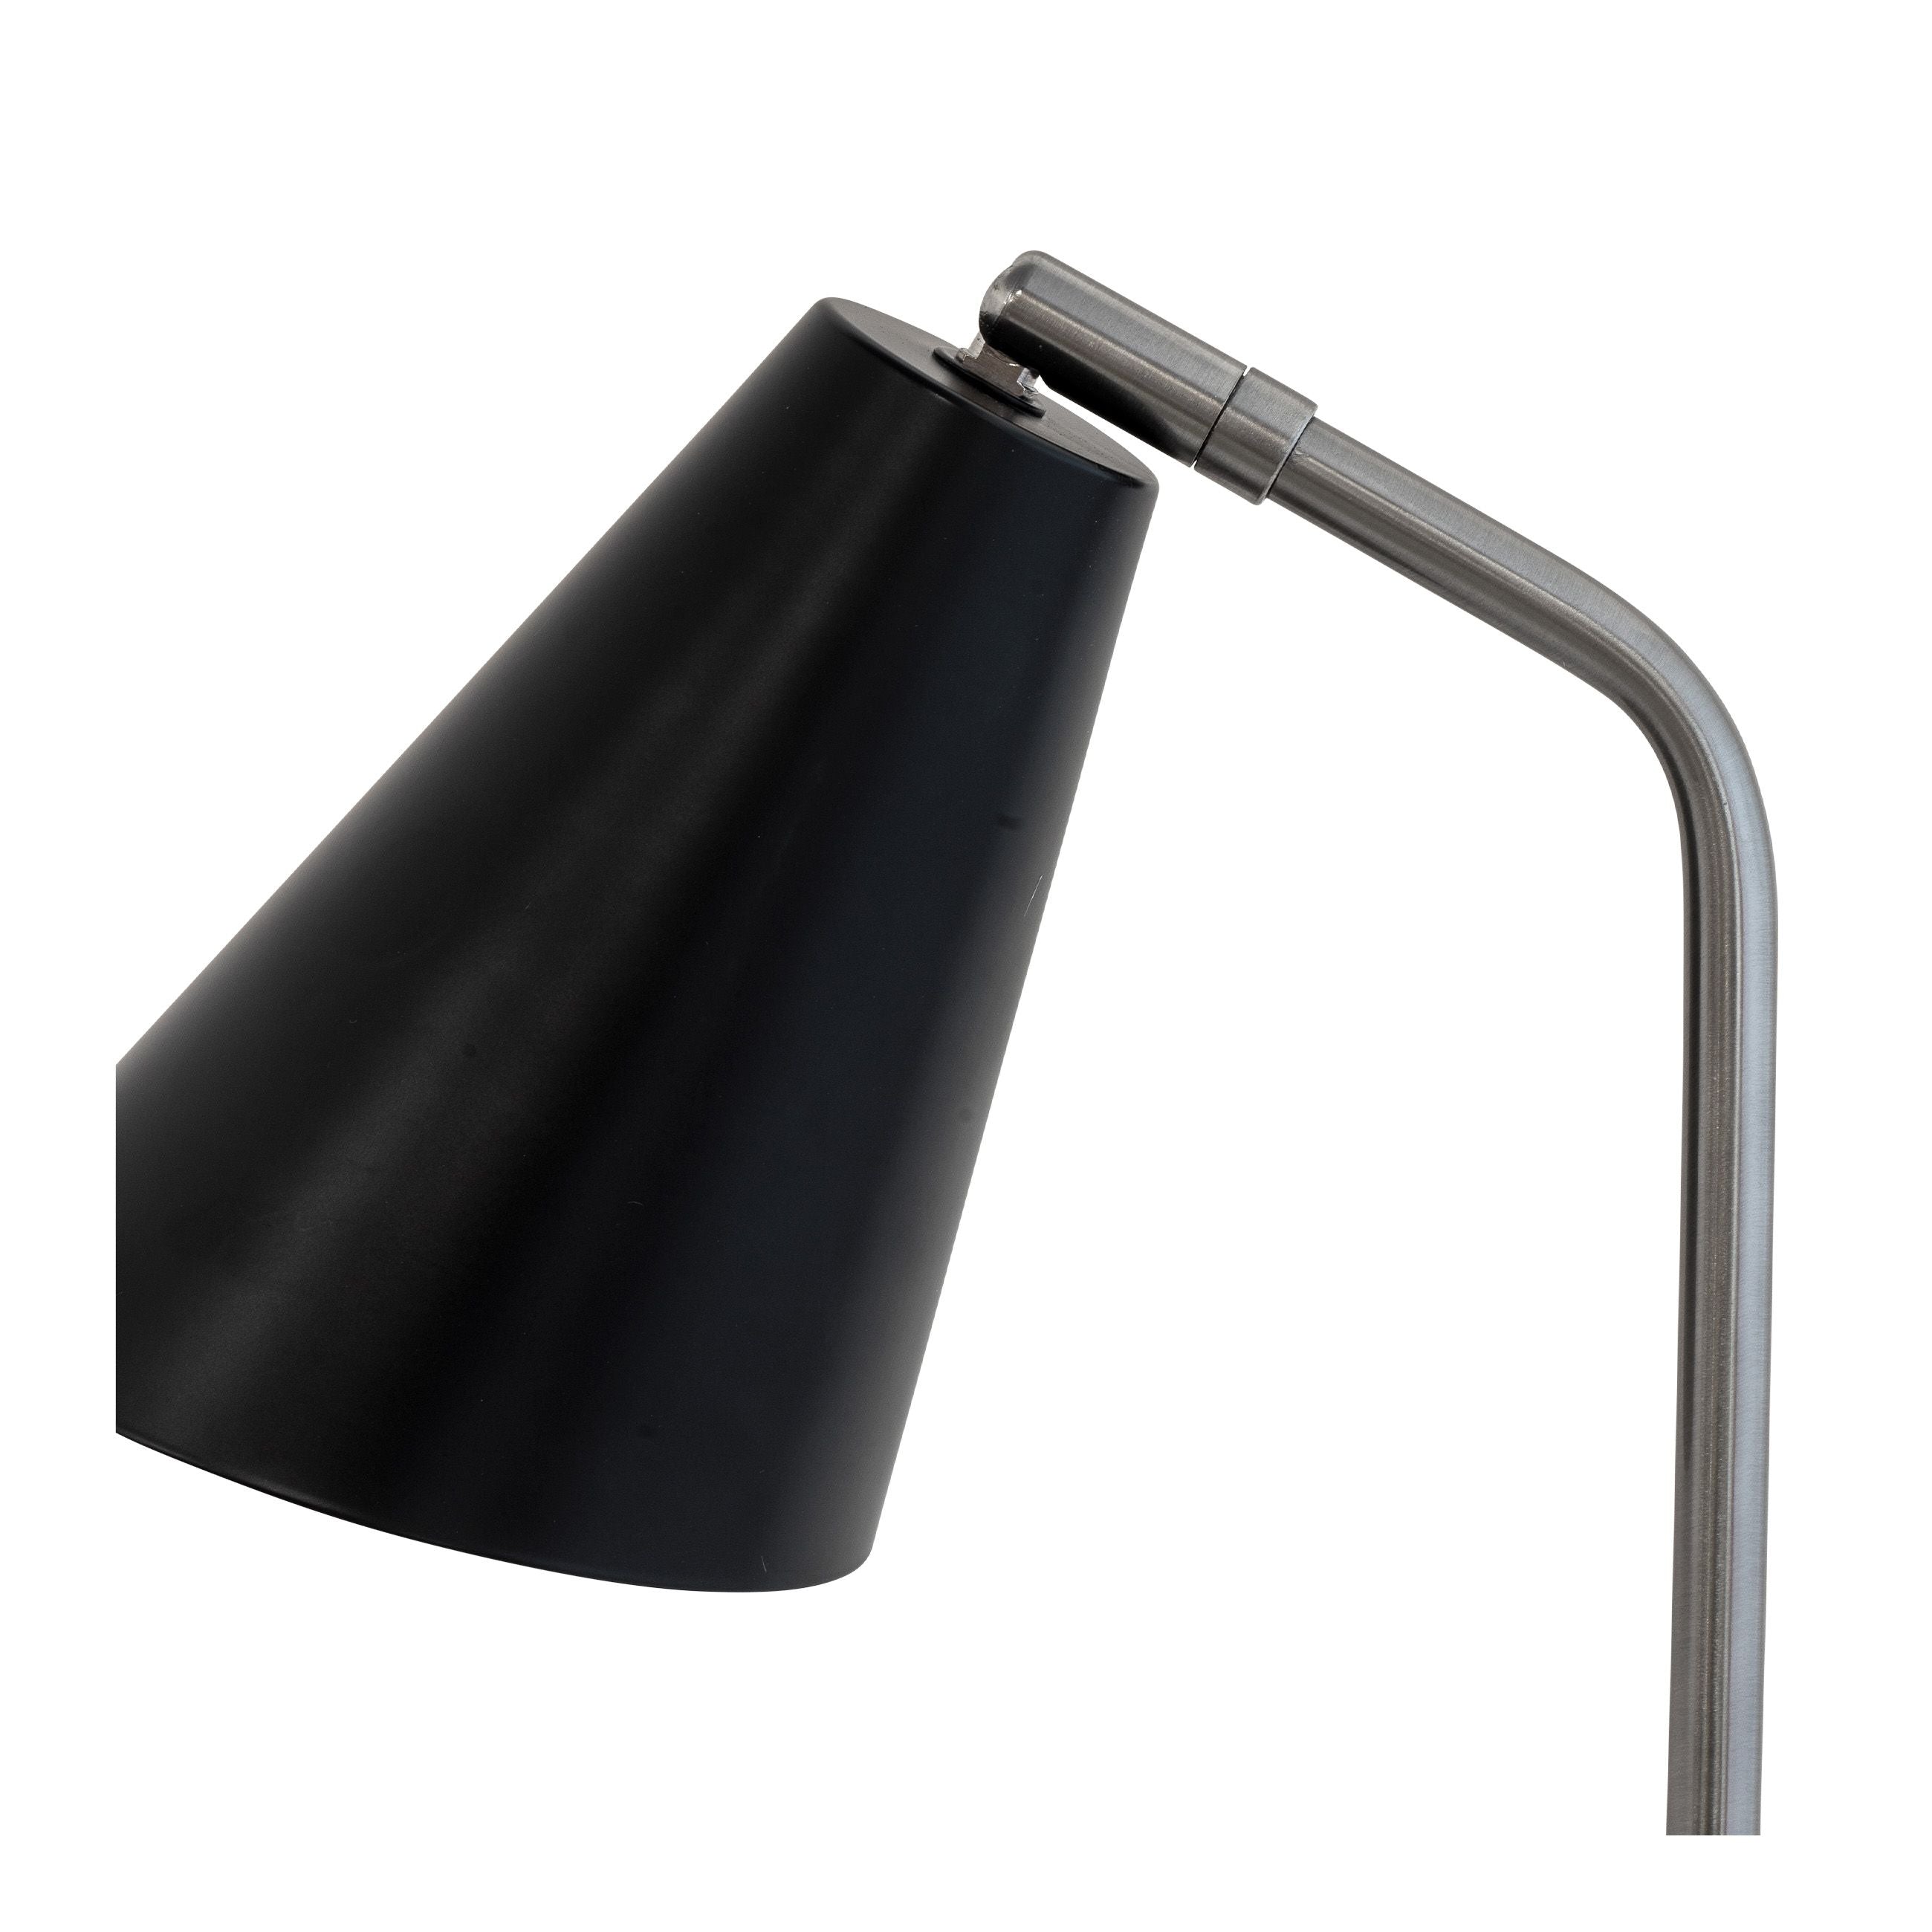 Dyberg Larsen Oswald Table Lamp, Black/Steel